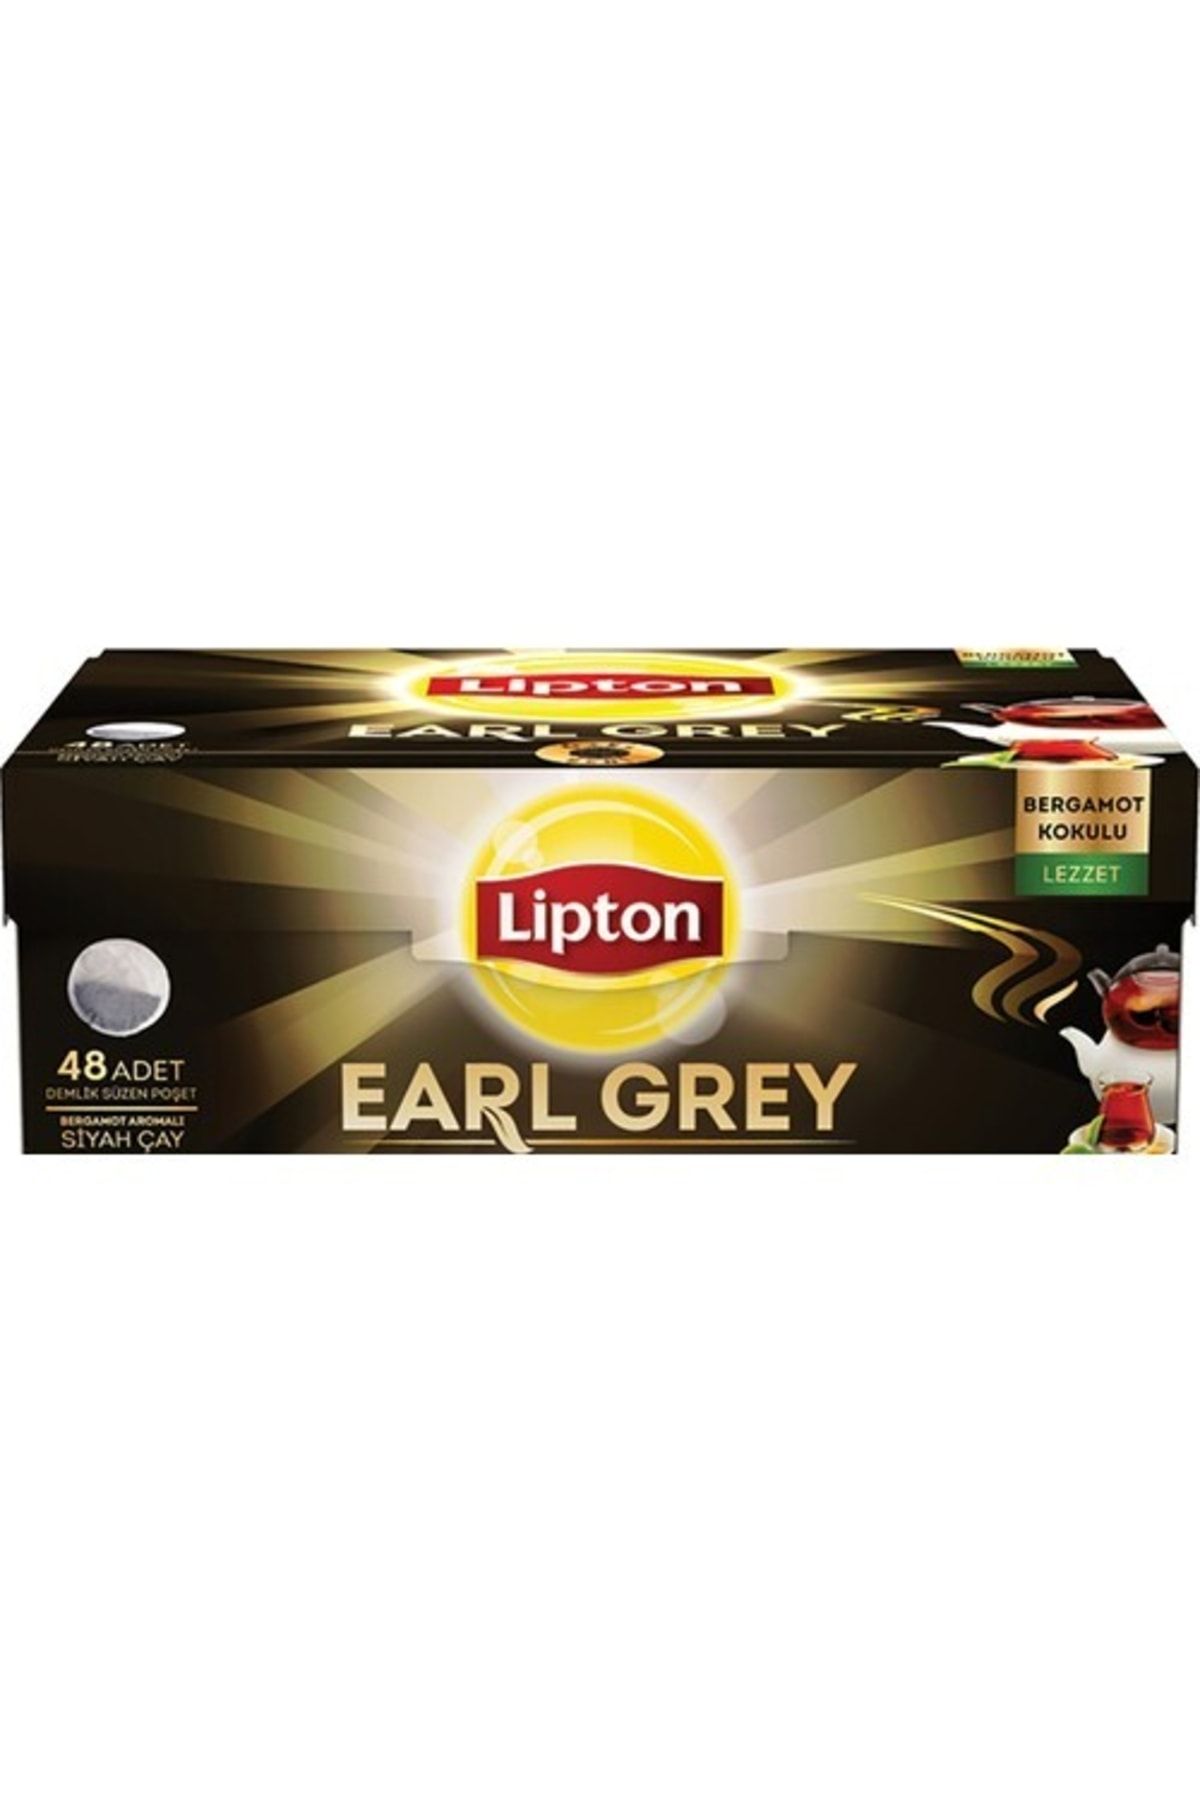 Lipton Siftaholsun Çay Earl Grey Demlik 48 Li X 16 Adet